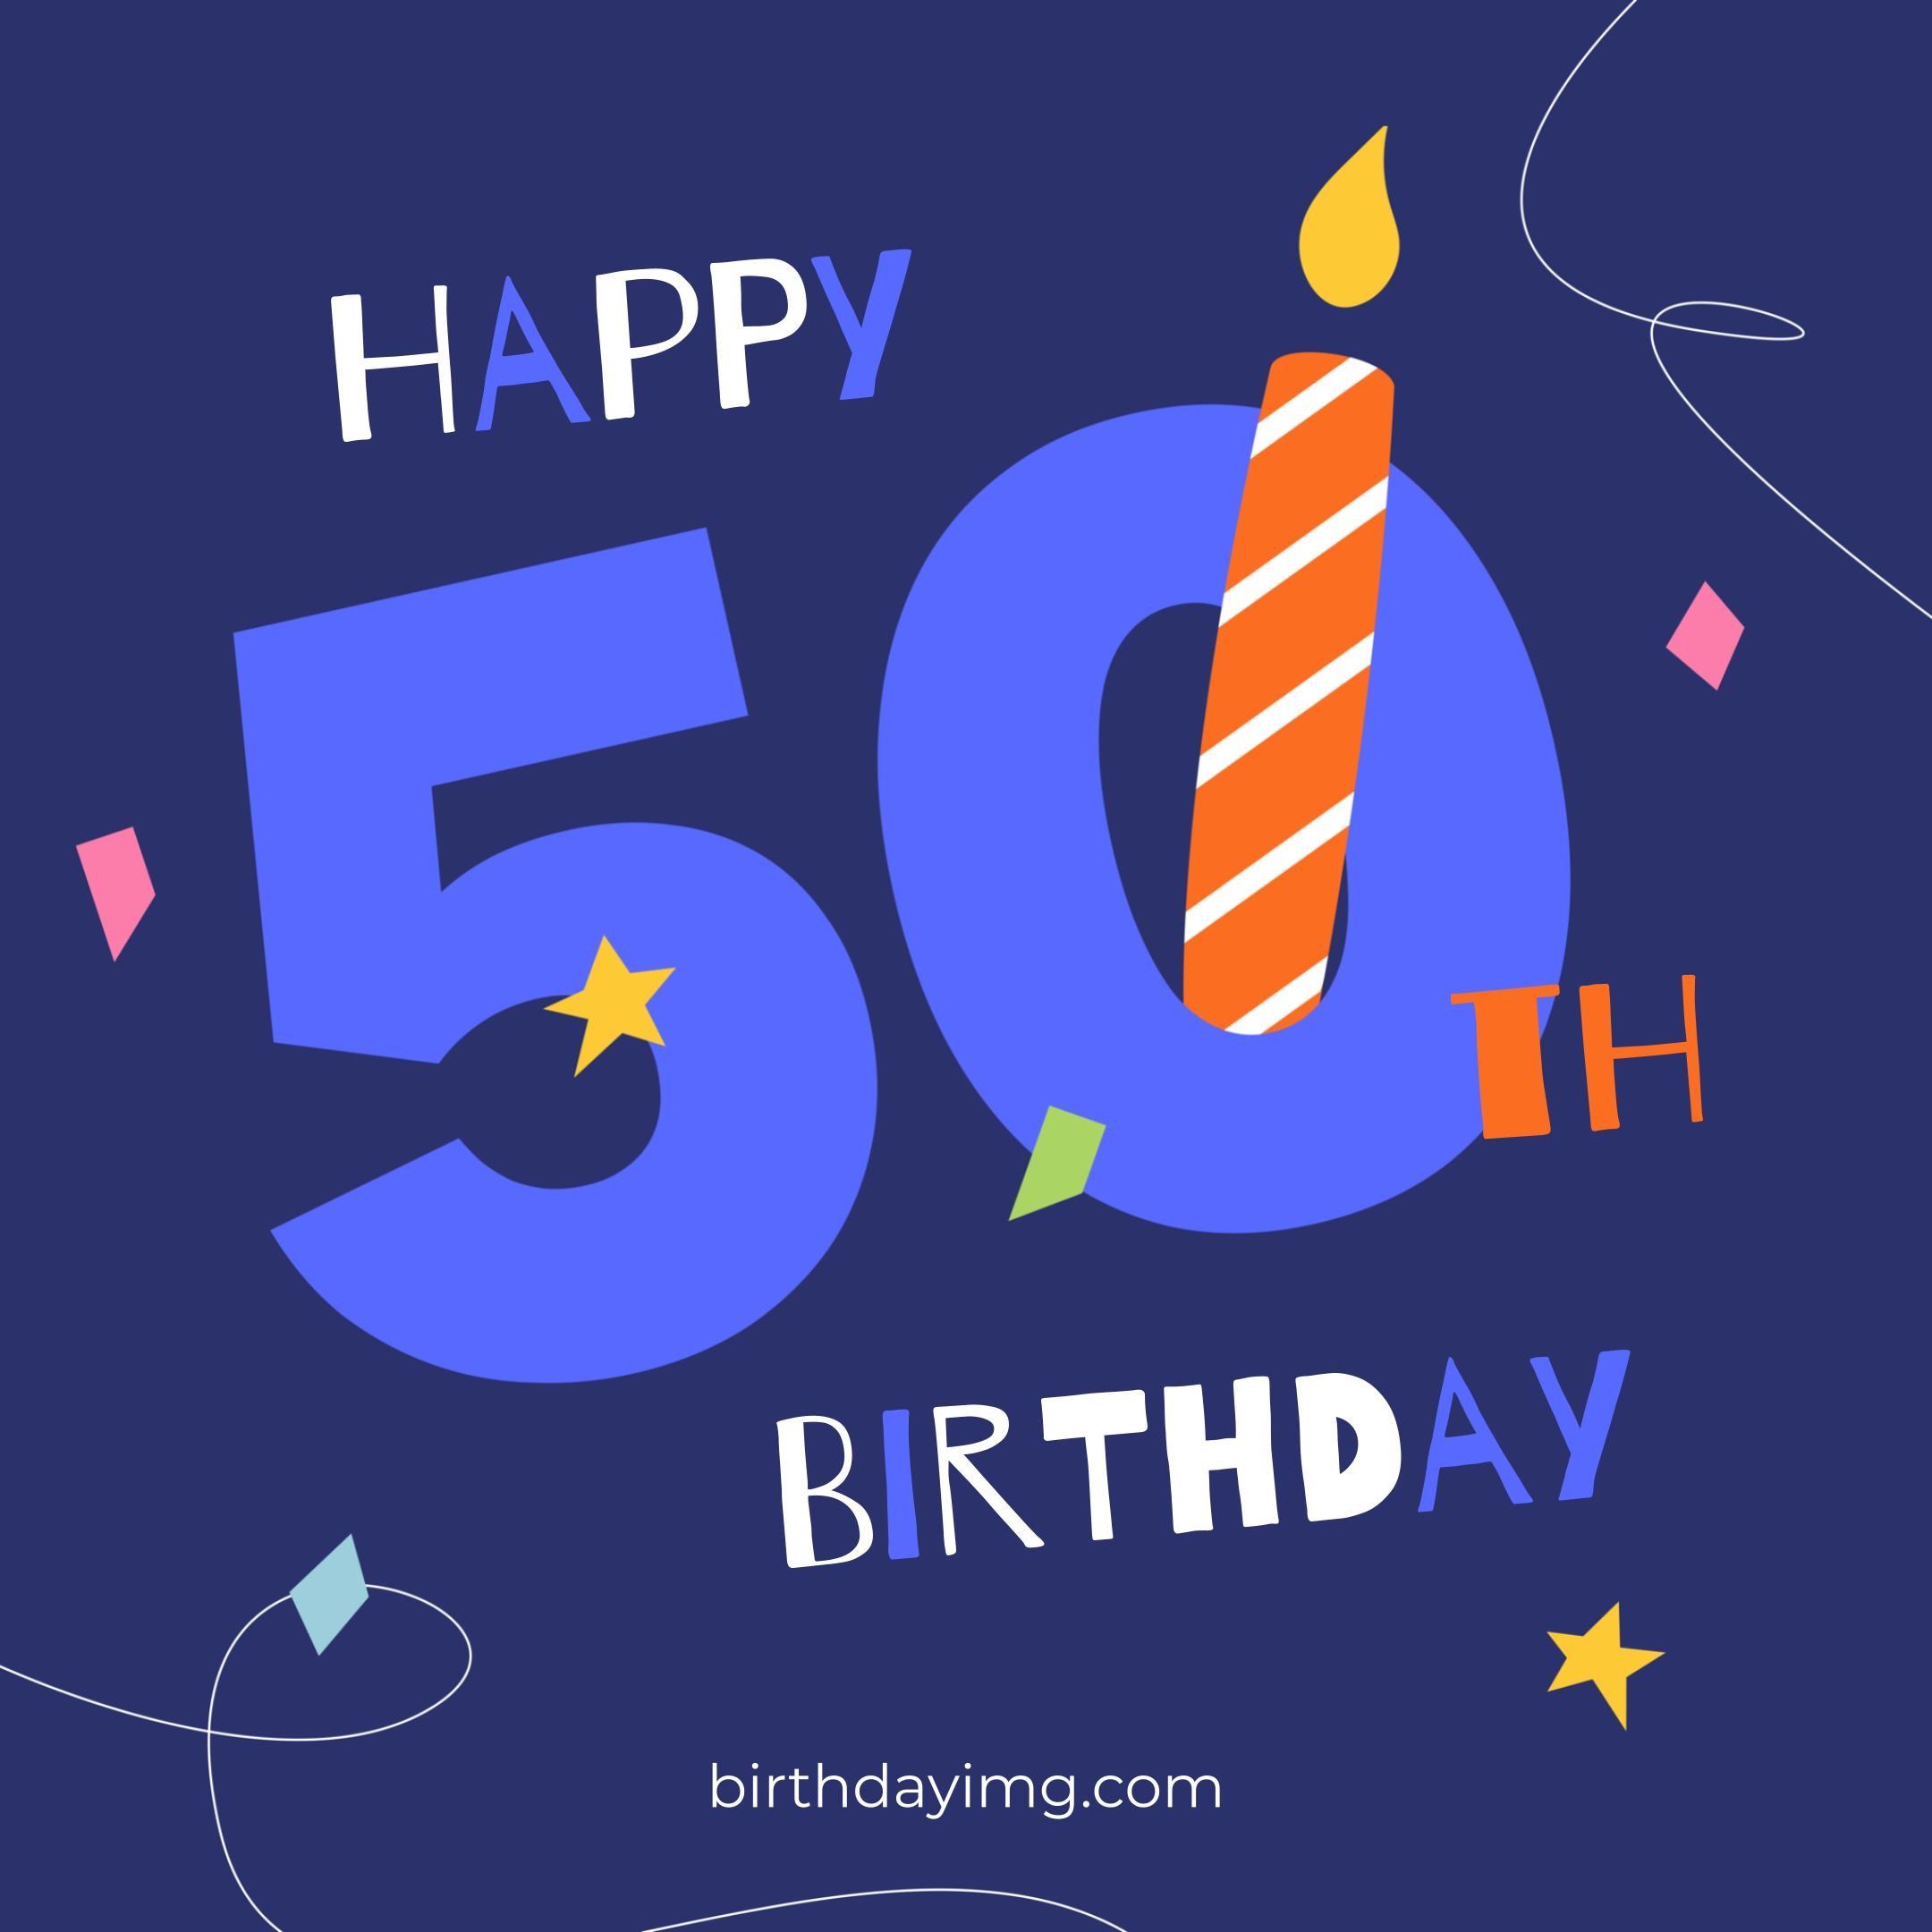 Free 50th Years Happy Birthday Image With Candle - birthdayimg.com